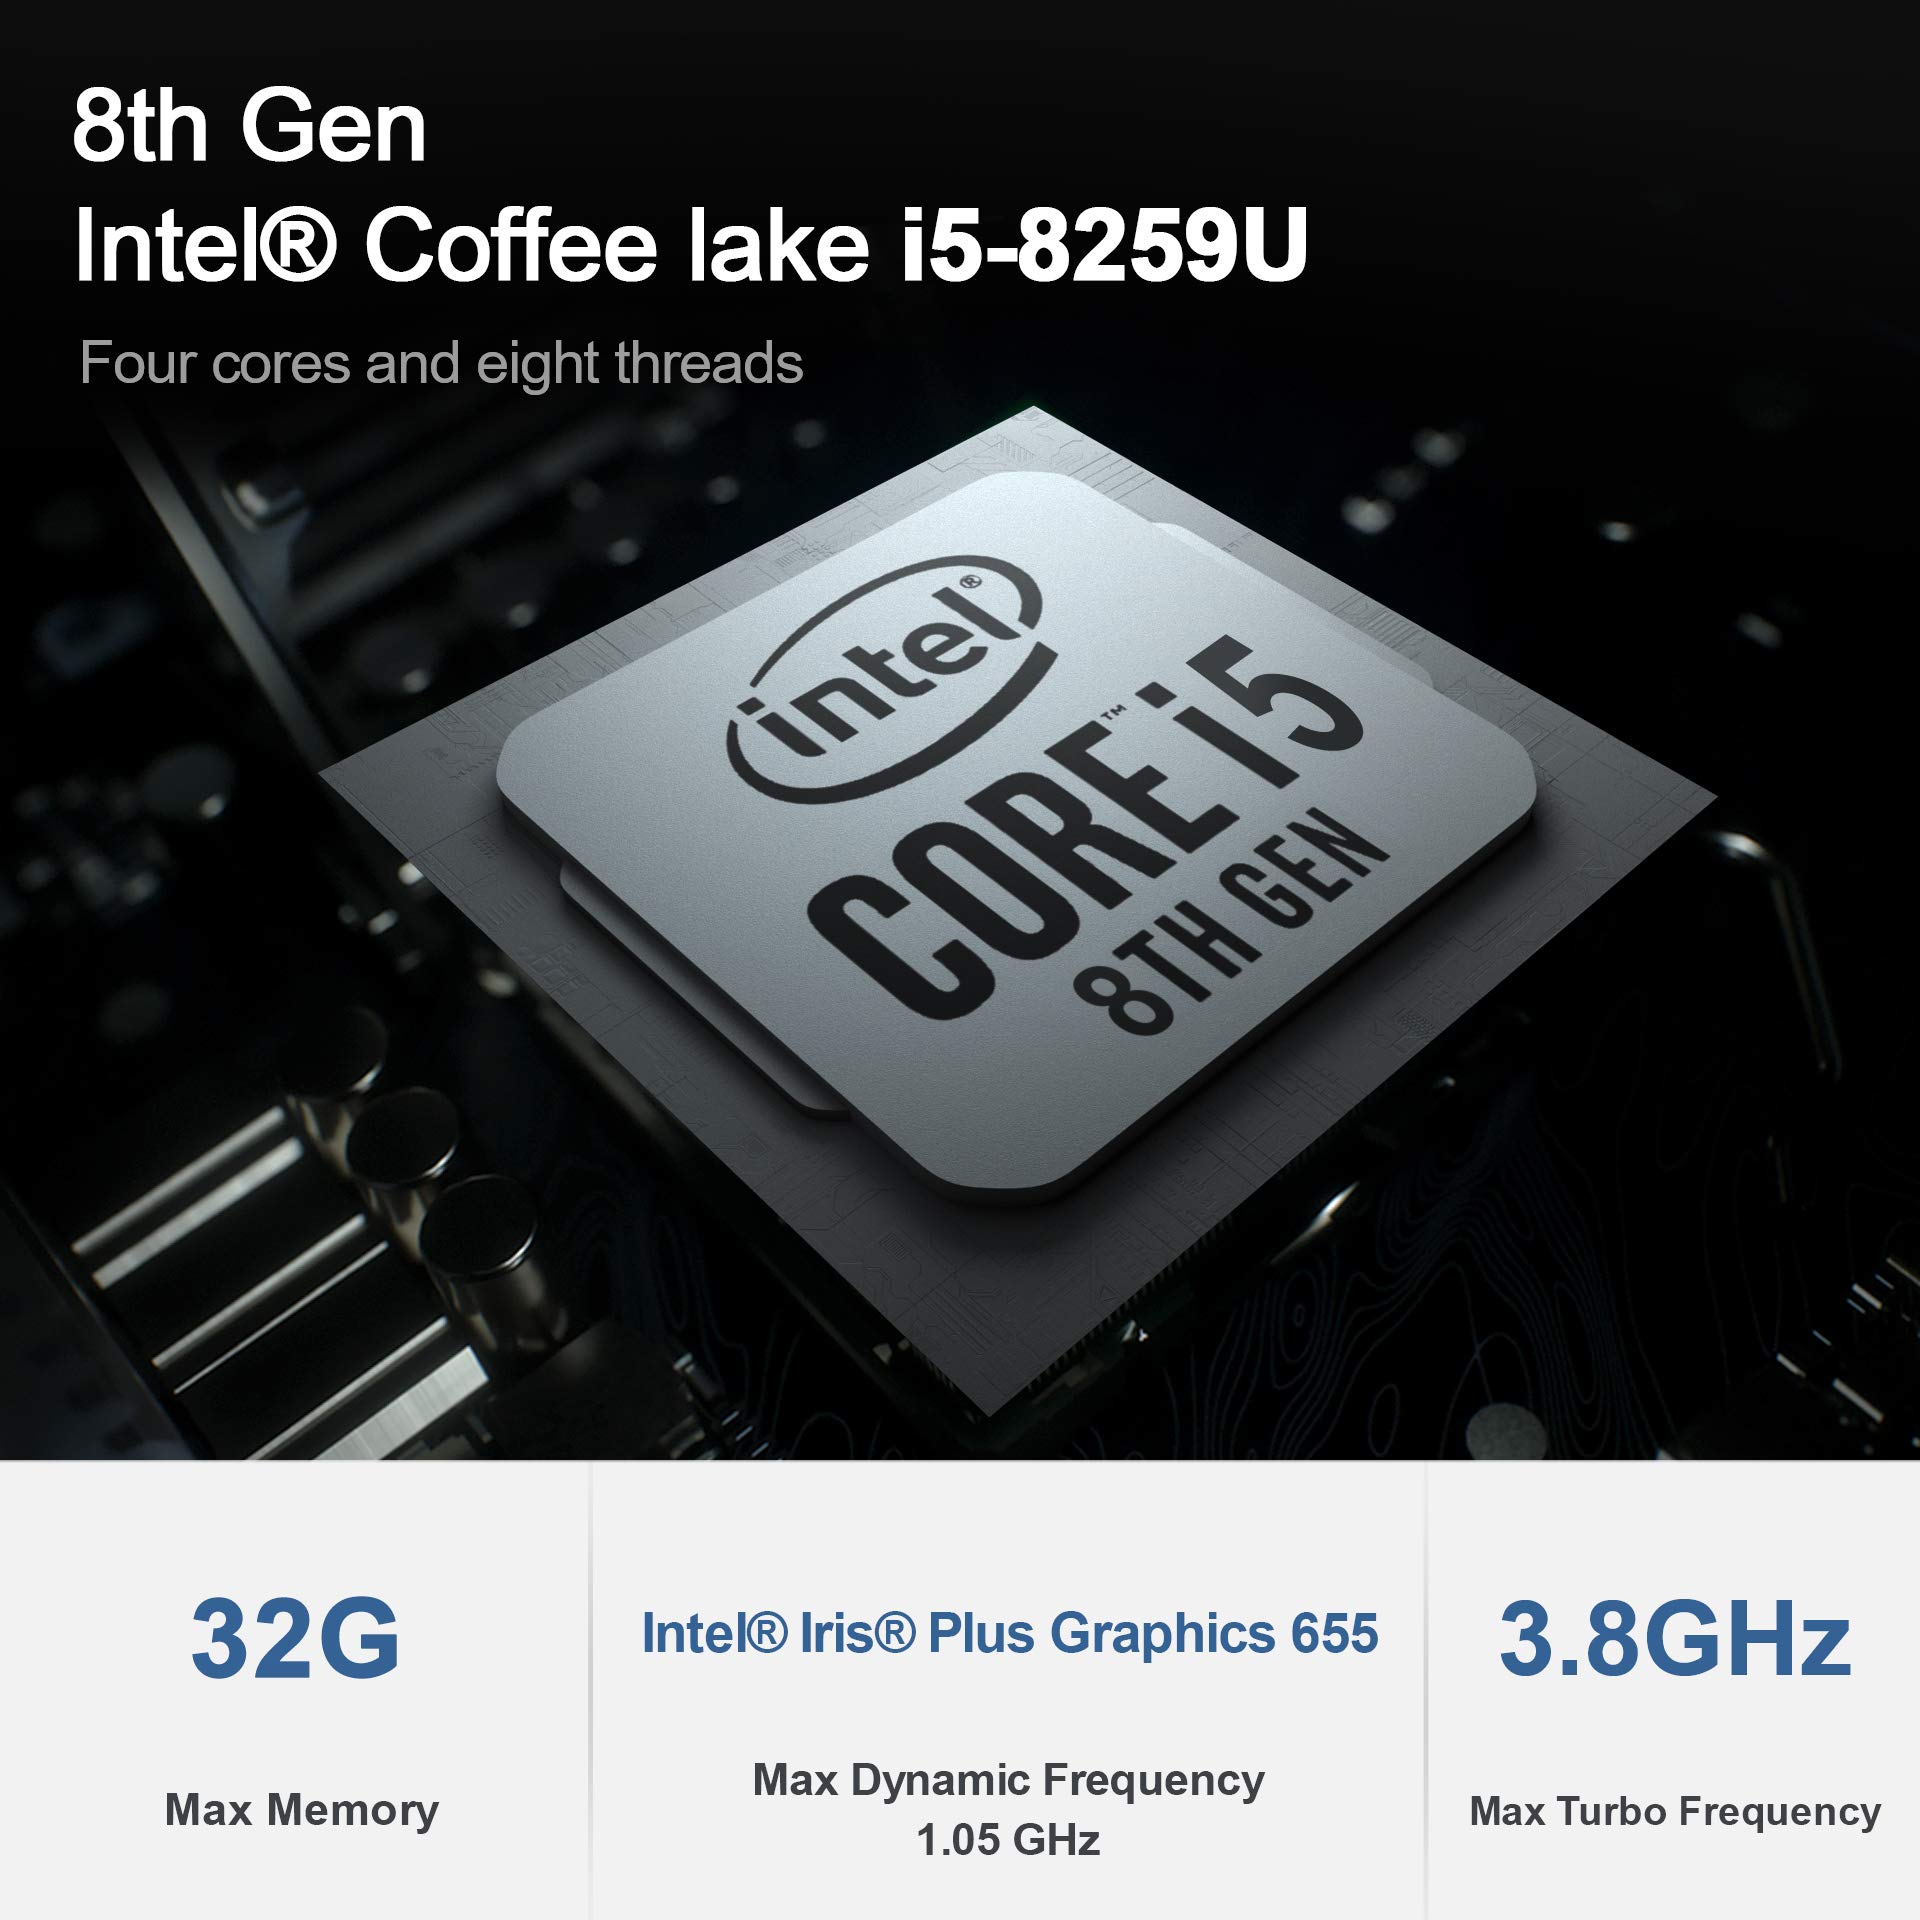 Beelink Mini PC Desktop Computers SEi8 8th Generation i5-8259U up to 3.8Ghz (4C/8T) 8GB 256GB Graphics 655 4K@30Hz Dual HDMI WiFi BT5.0 Gigabit Ethernet Supported